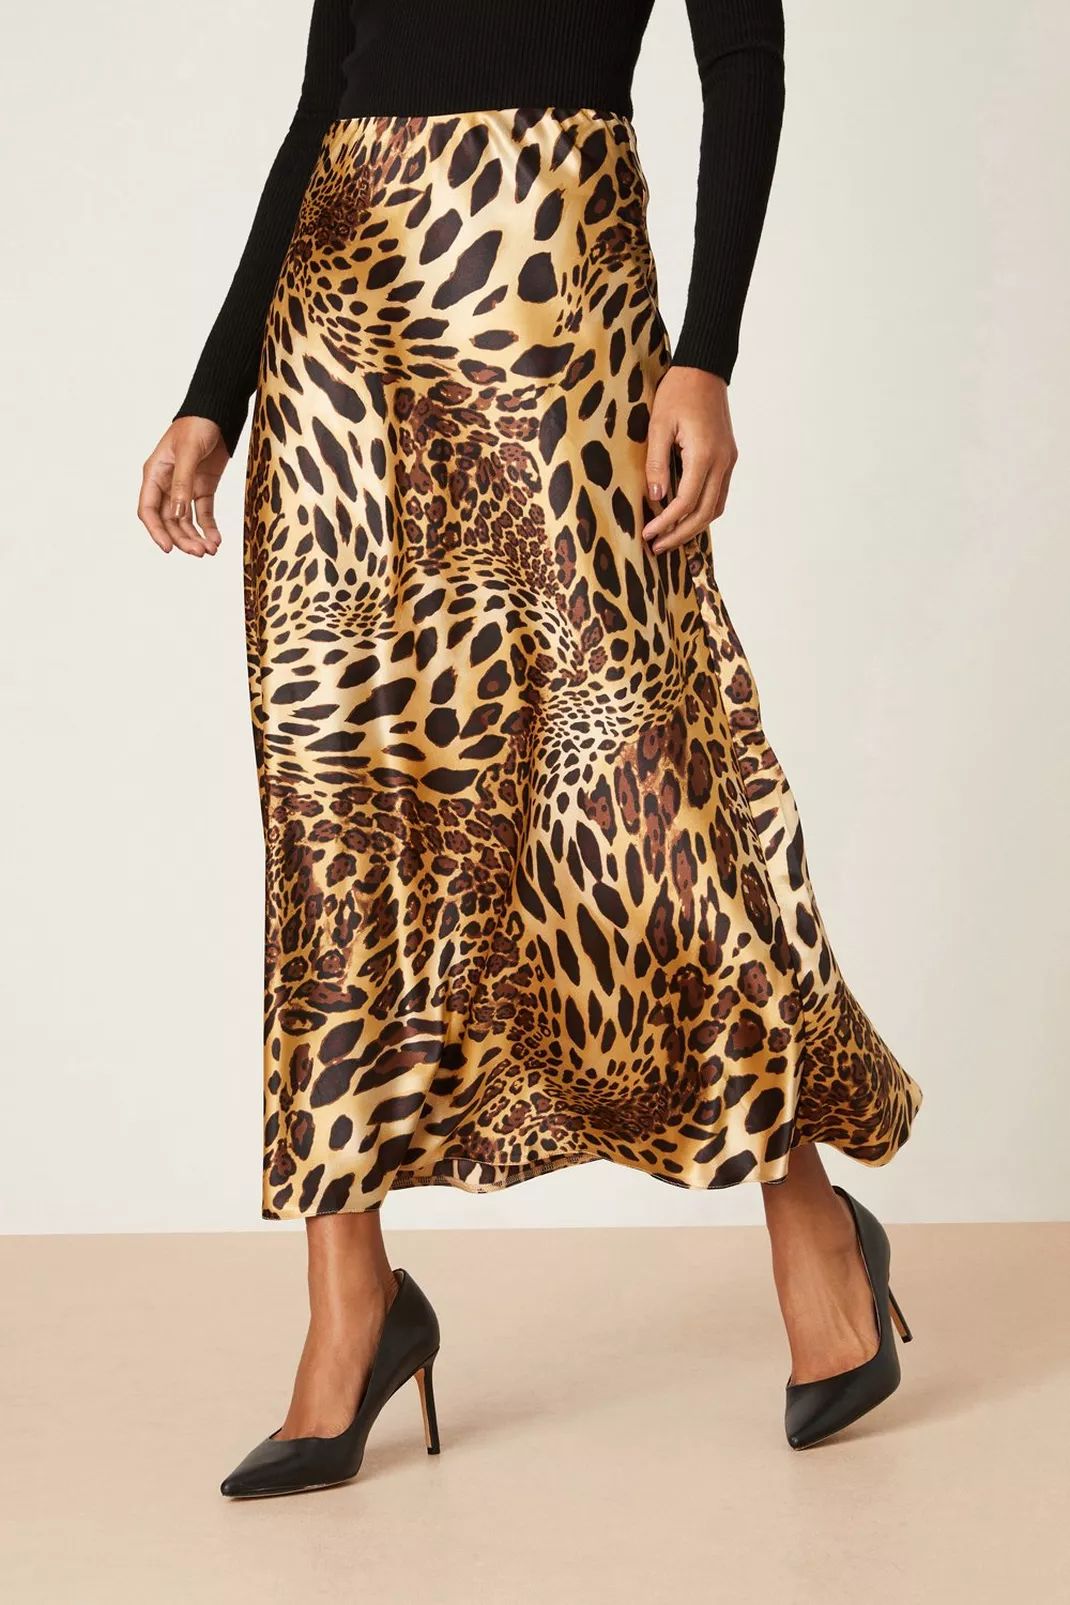 Buy Leopard Satin Bias Midi Skirt for GBP 25.00 | Dorothy Perkins UK | Dorothy Perkins (UK)